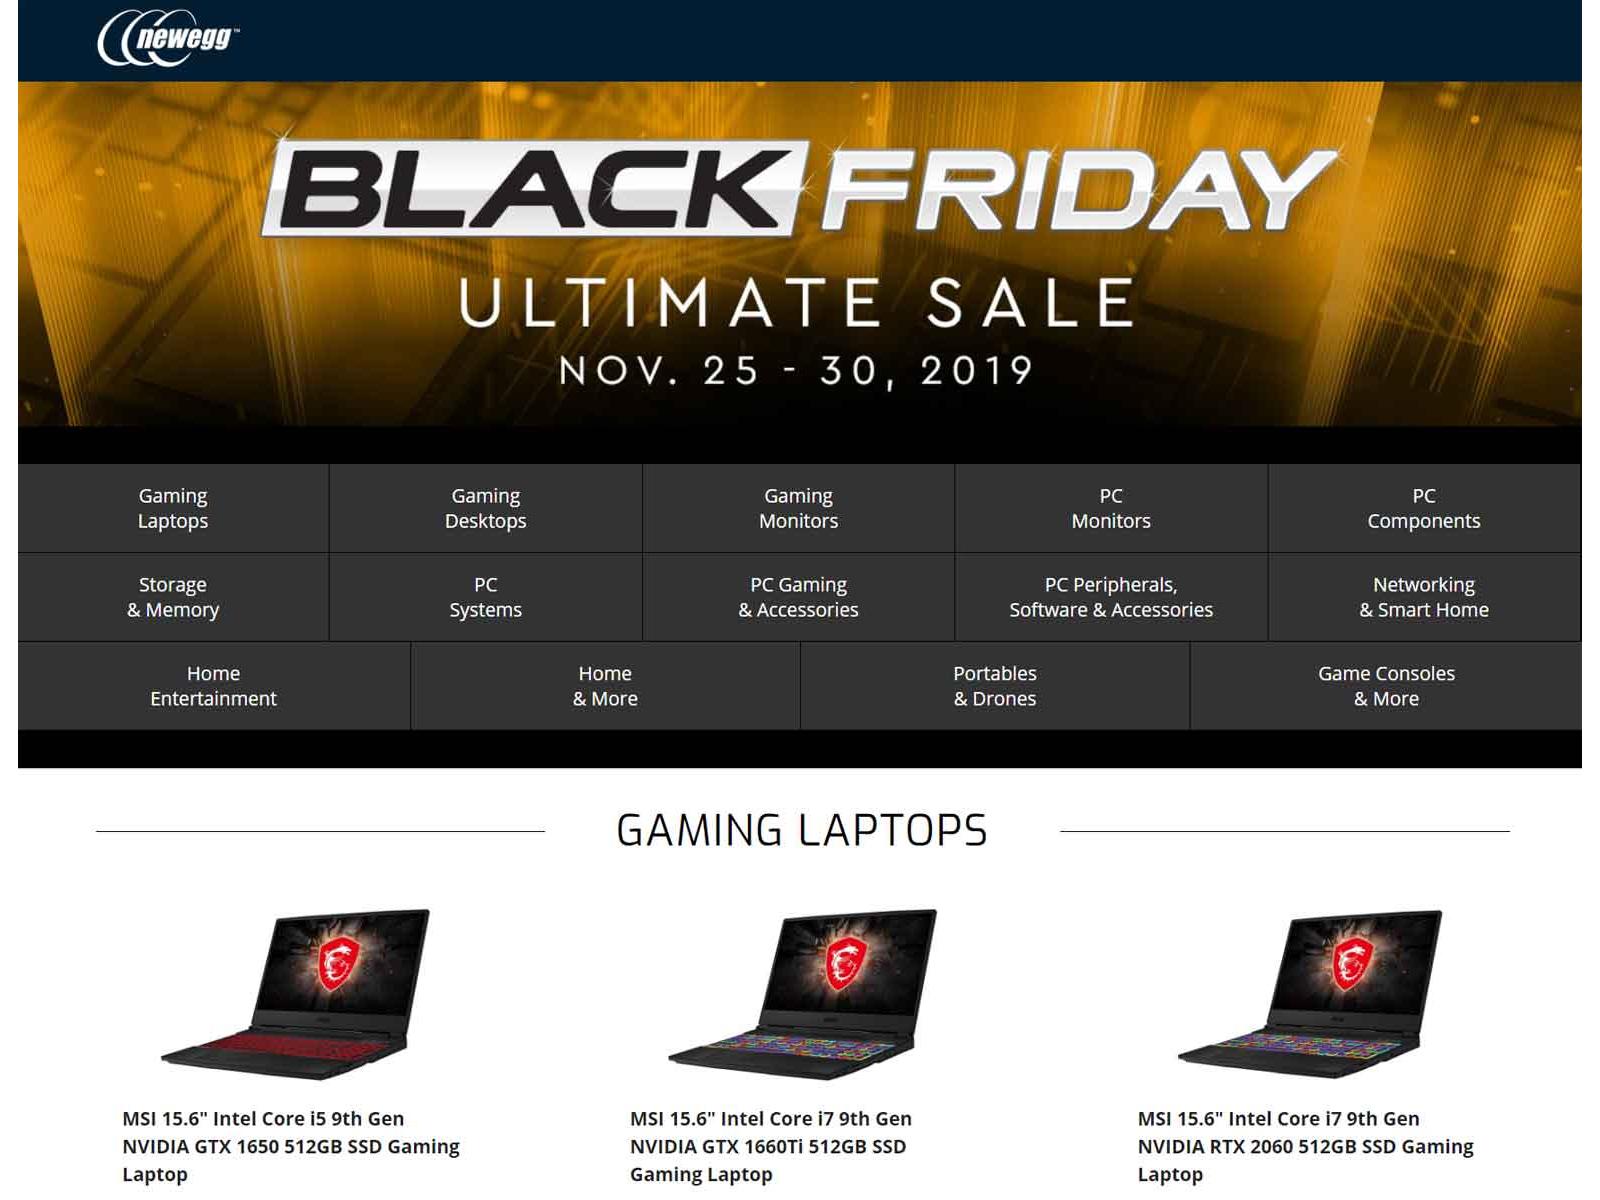 Black Friday 2019 PC gaming deals - Laptops, desktops, and more